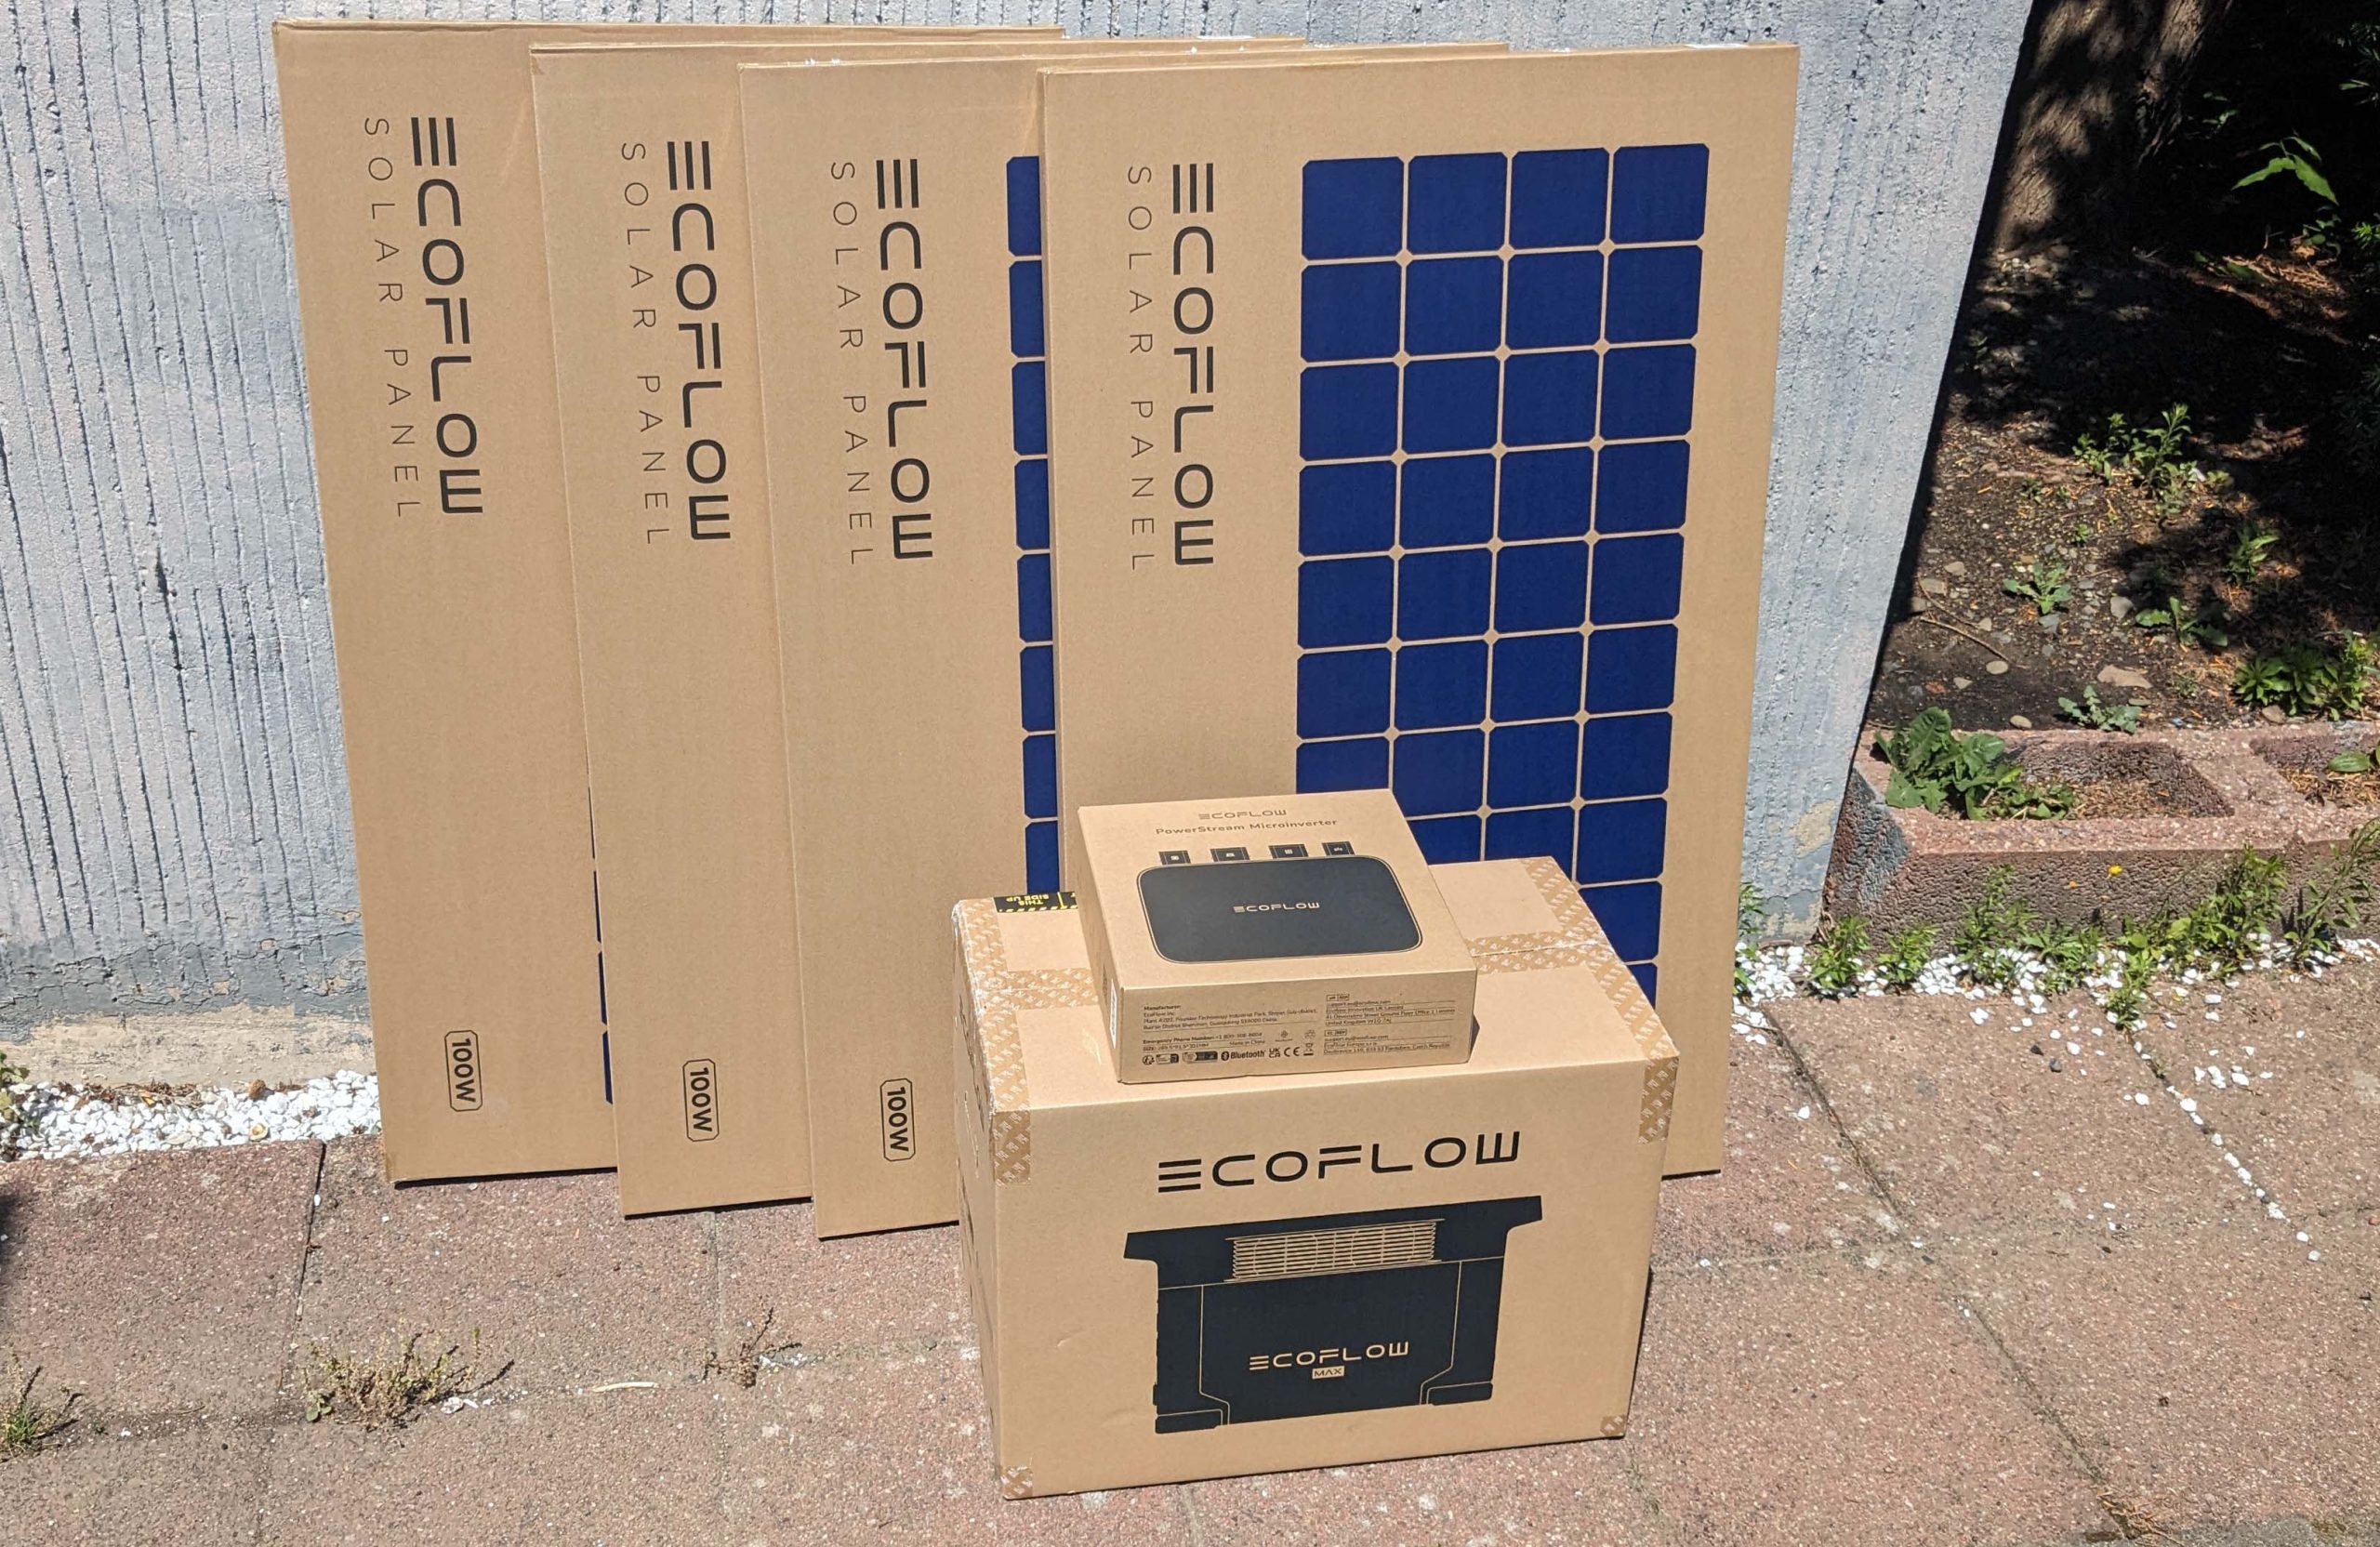 EcoFlow PowerStream, Powerstation, Solar Installation Guide